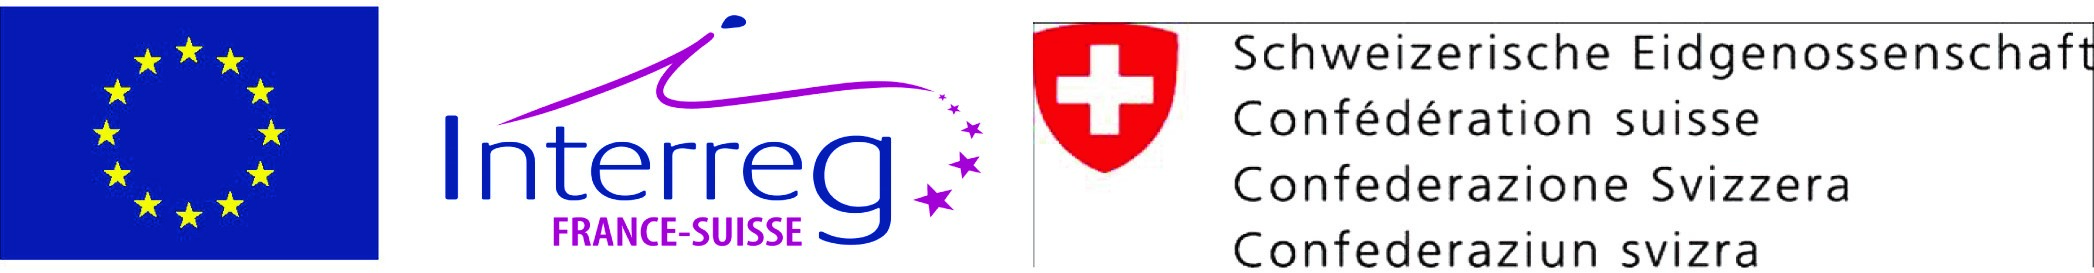 Interreg IVA France-Suisse - 2007-2013